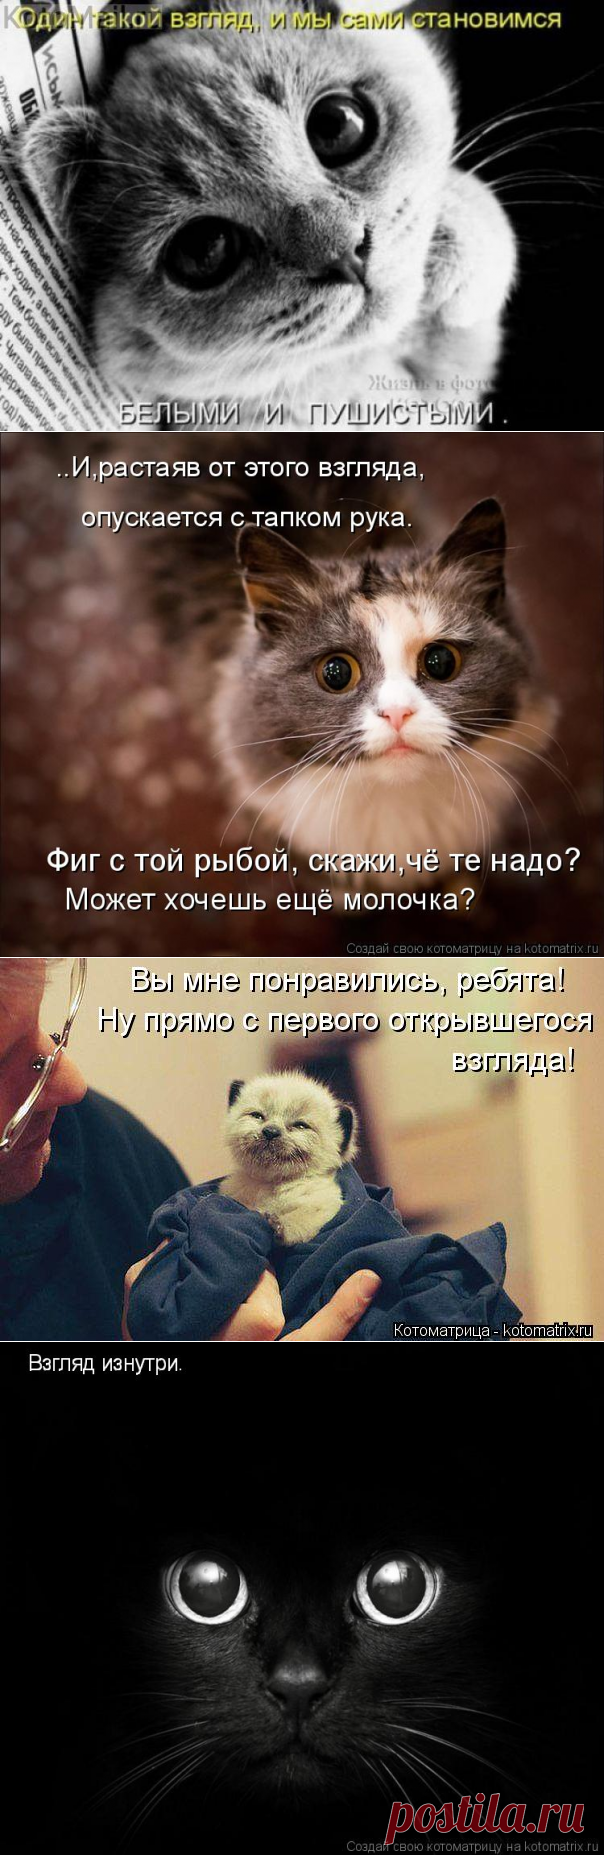 Один такой взгляд... | KotoMail.ru